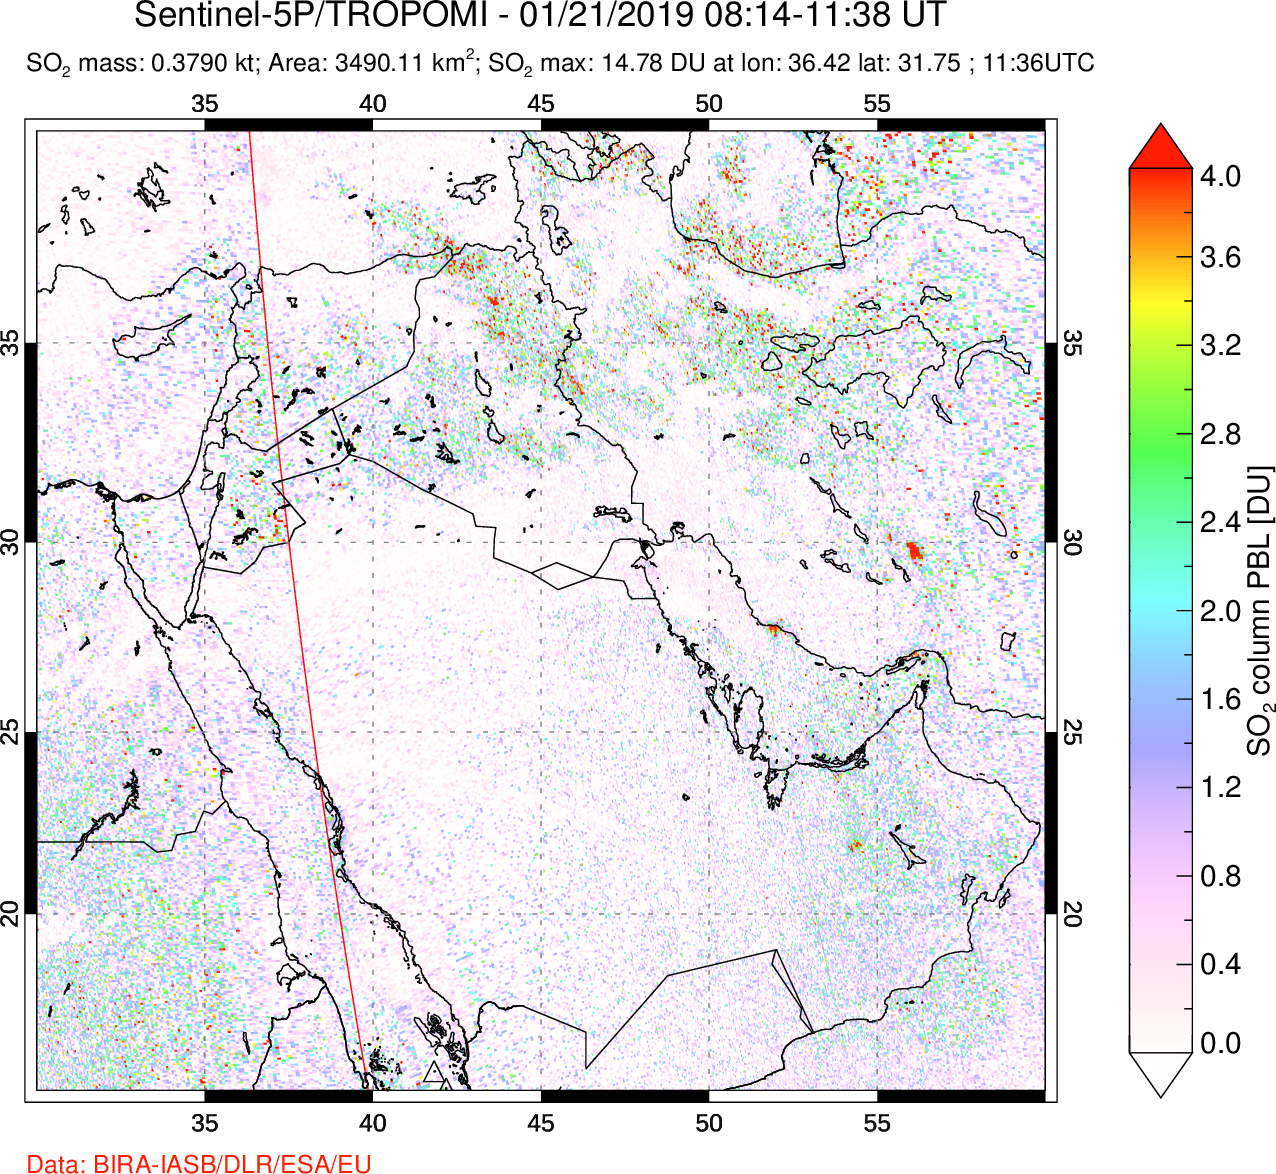 A sulfur dioxide image over Middle East on Jan 21, 2019.